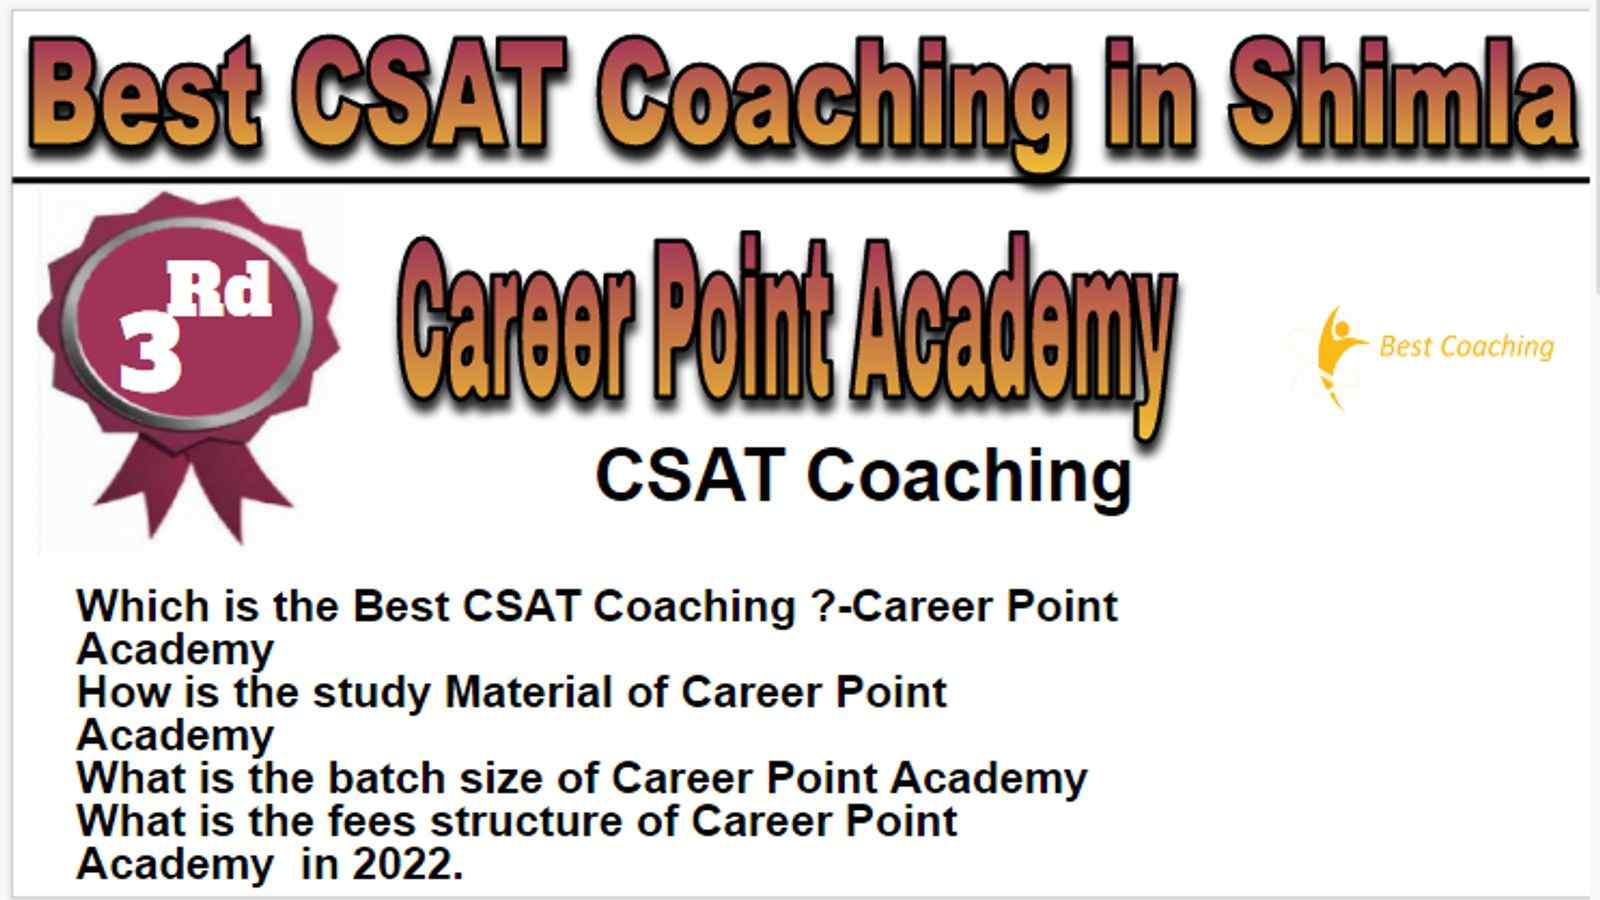 Rank 3 Best CSAT Coaching in Shimla